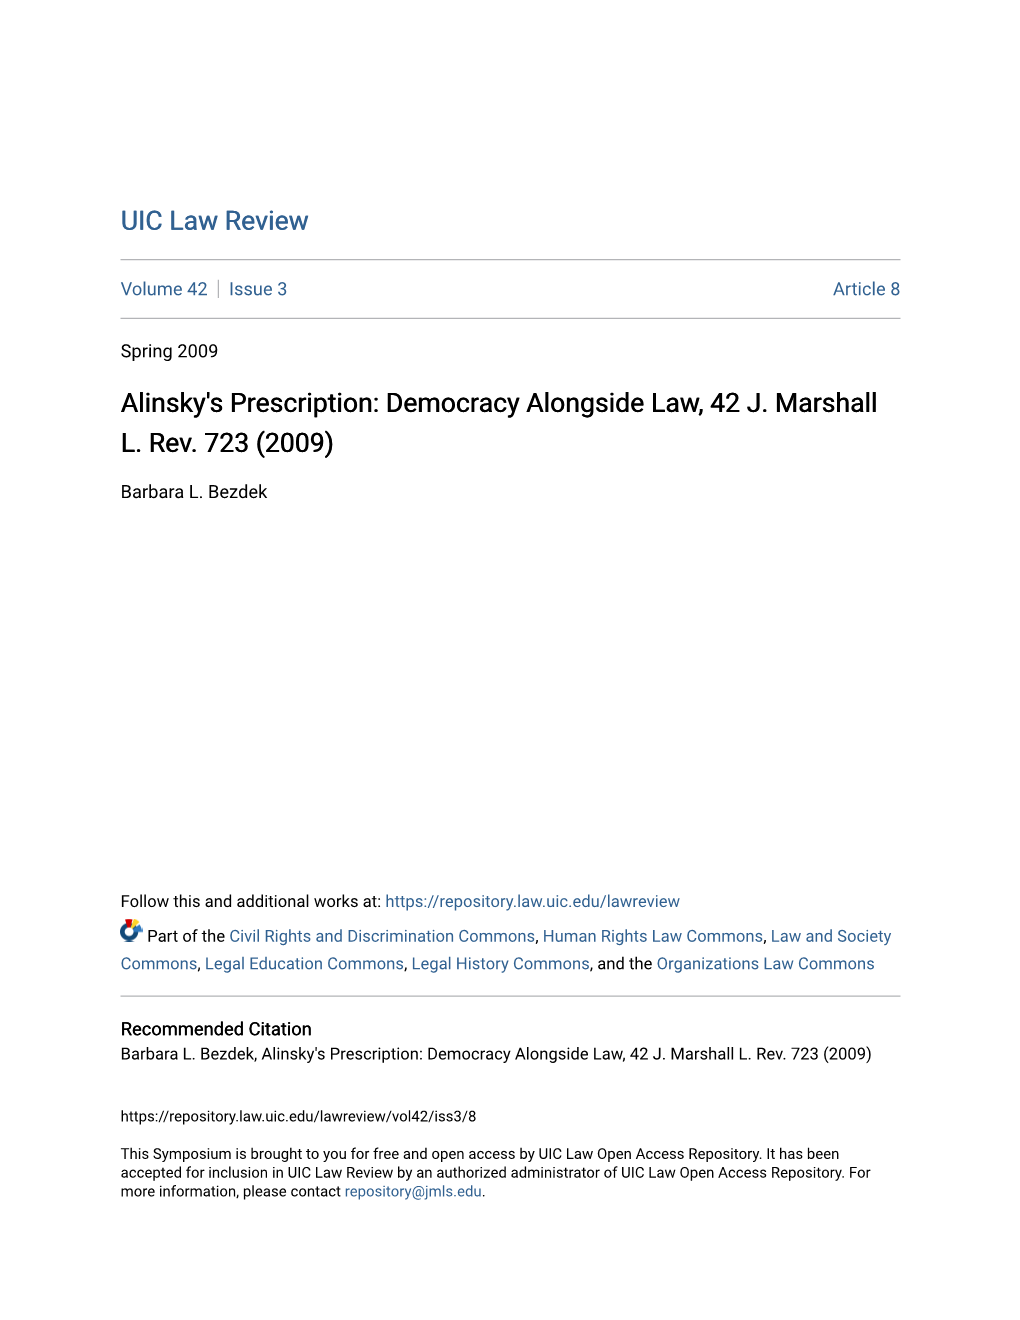 Democracy Alongside Law, 42 J. Marshall L. Rev. 723 (2009)